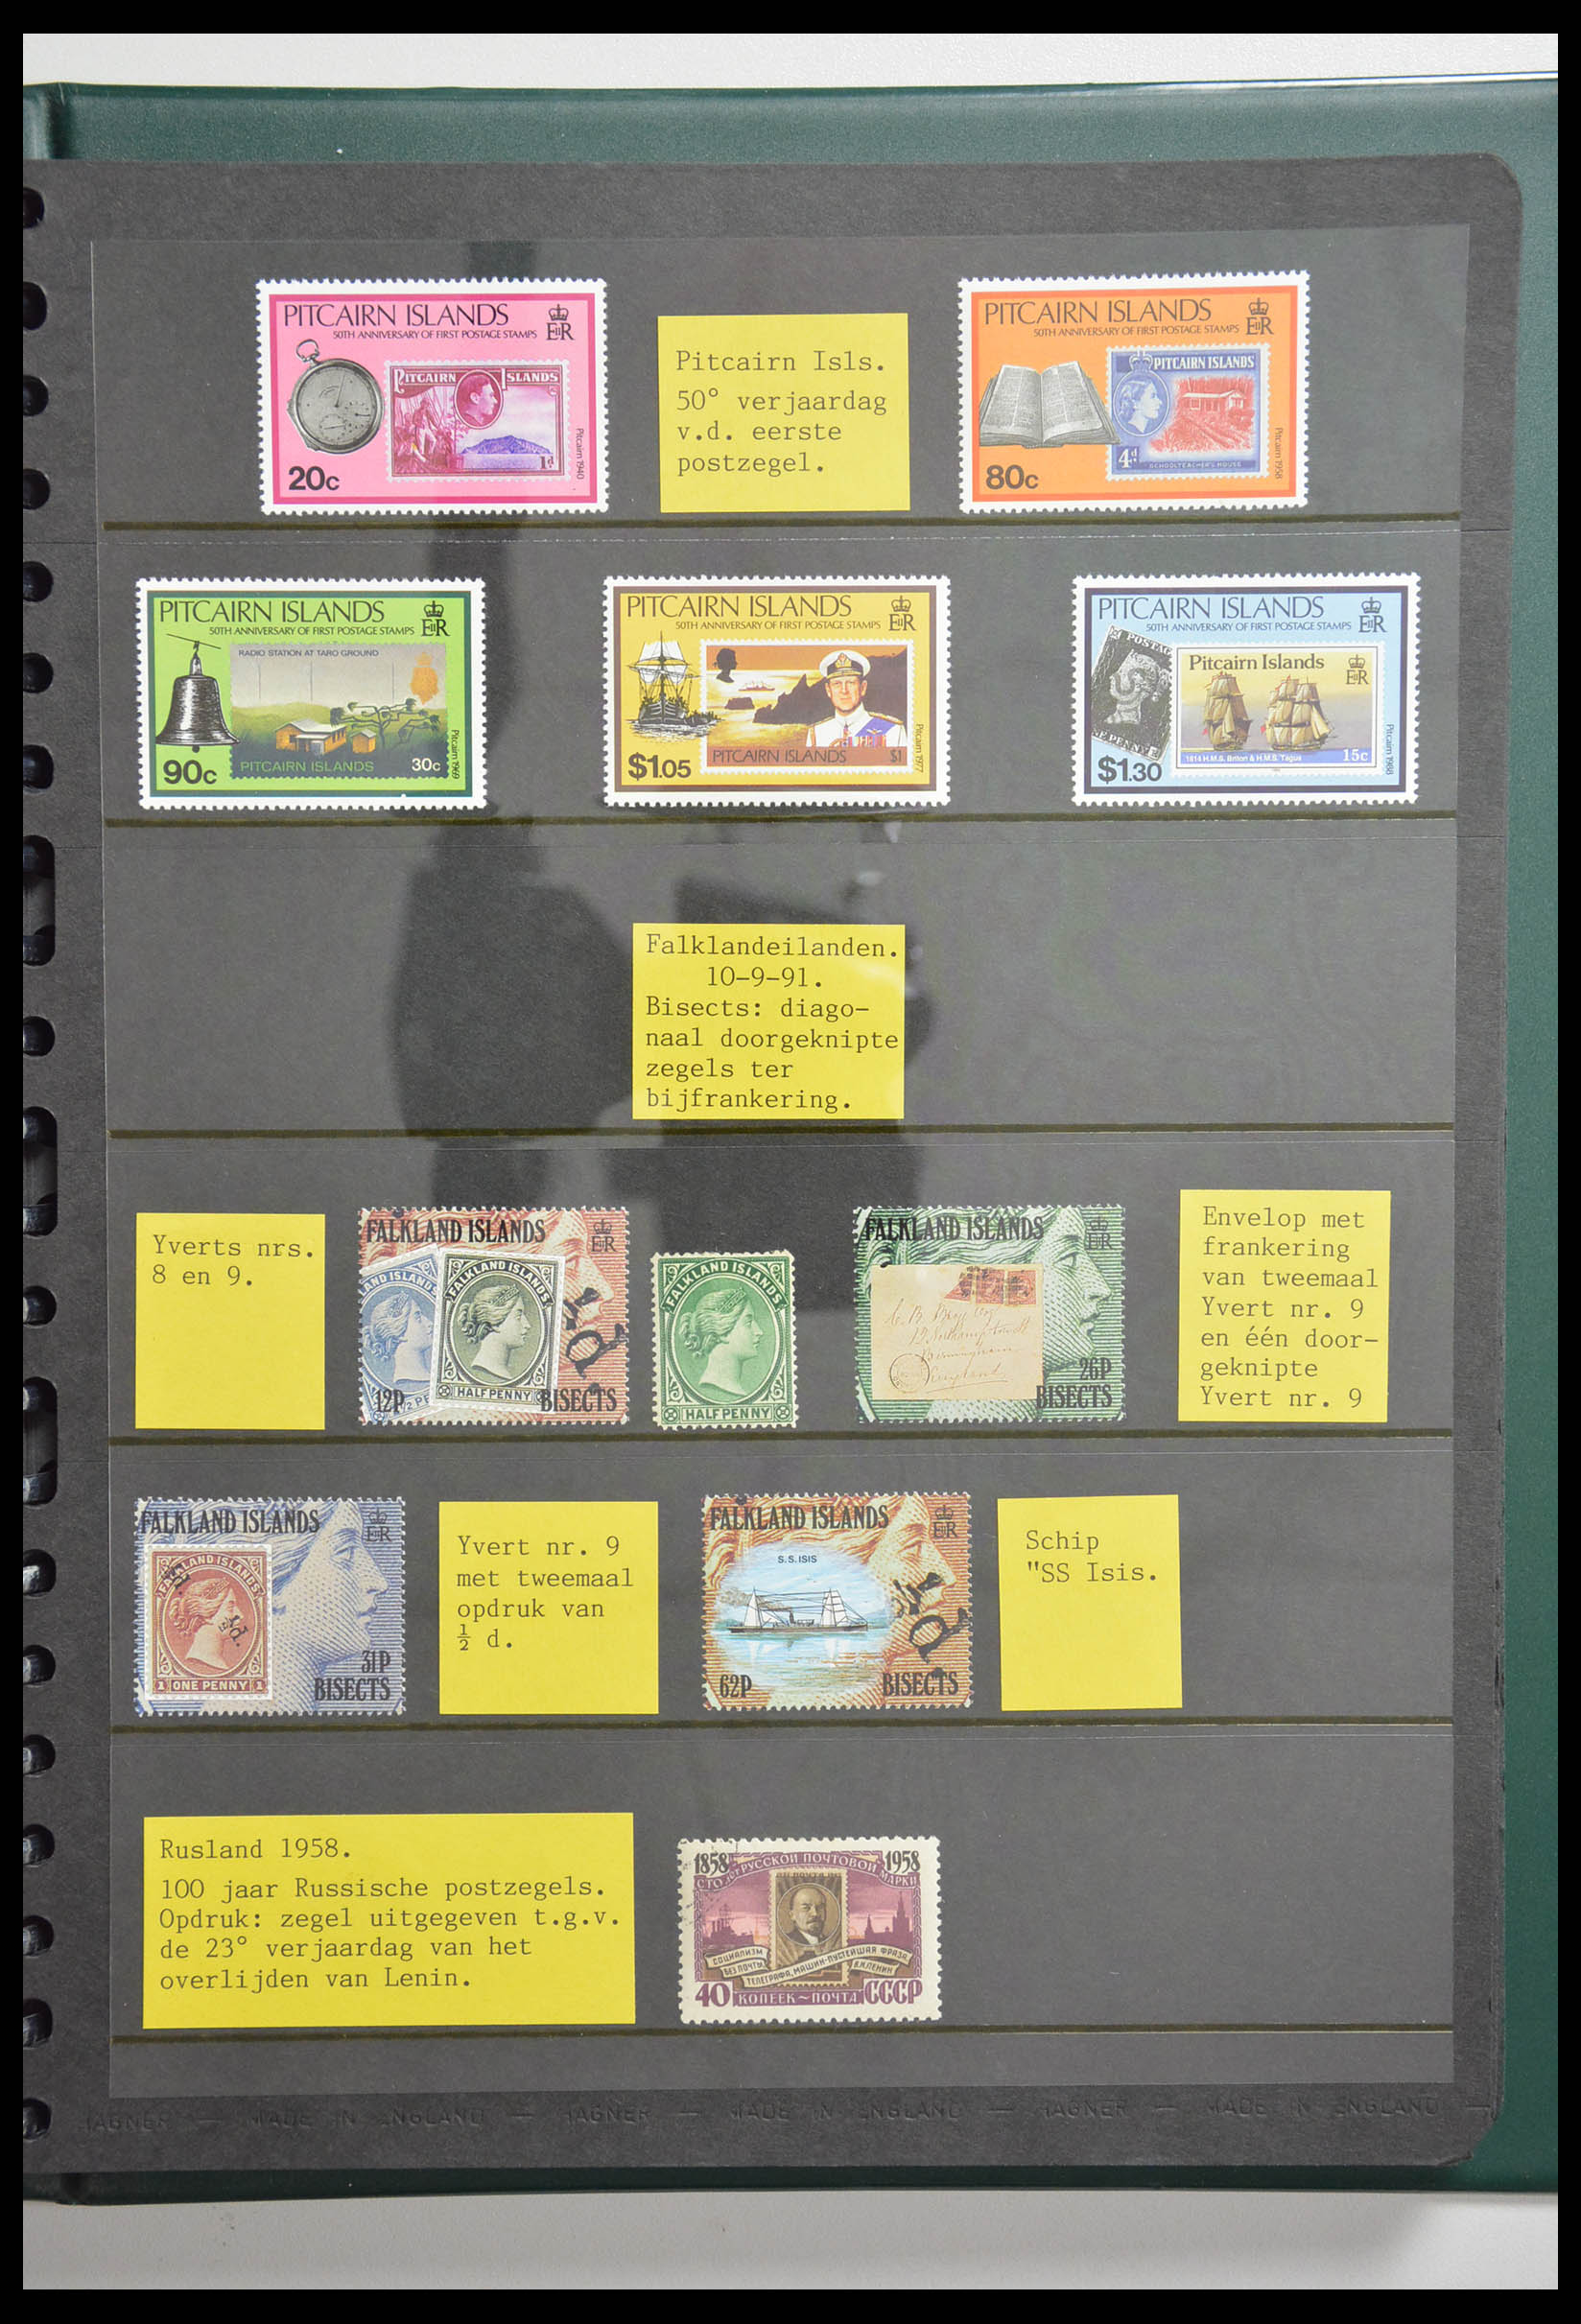 28337 020 - 28337 Postzegel op postzegel 1840-2001.